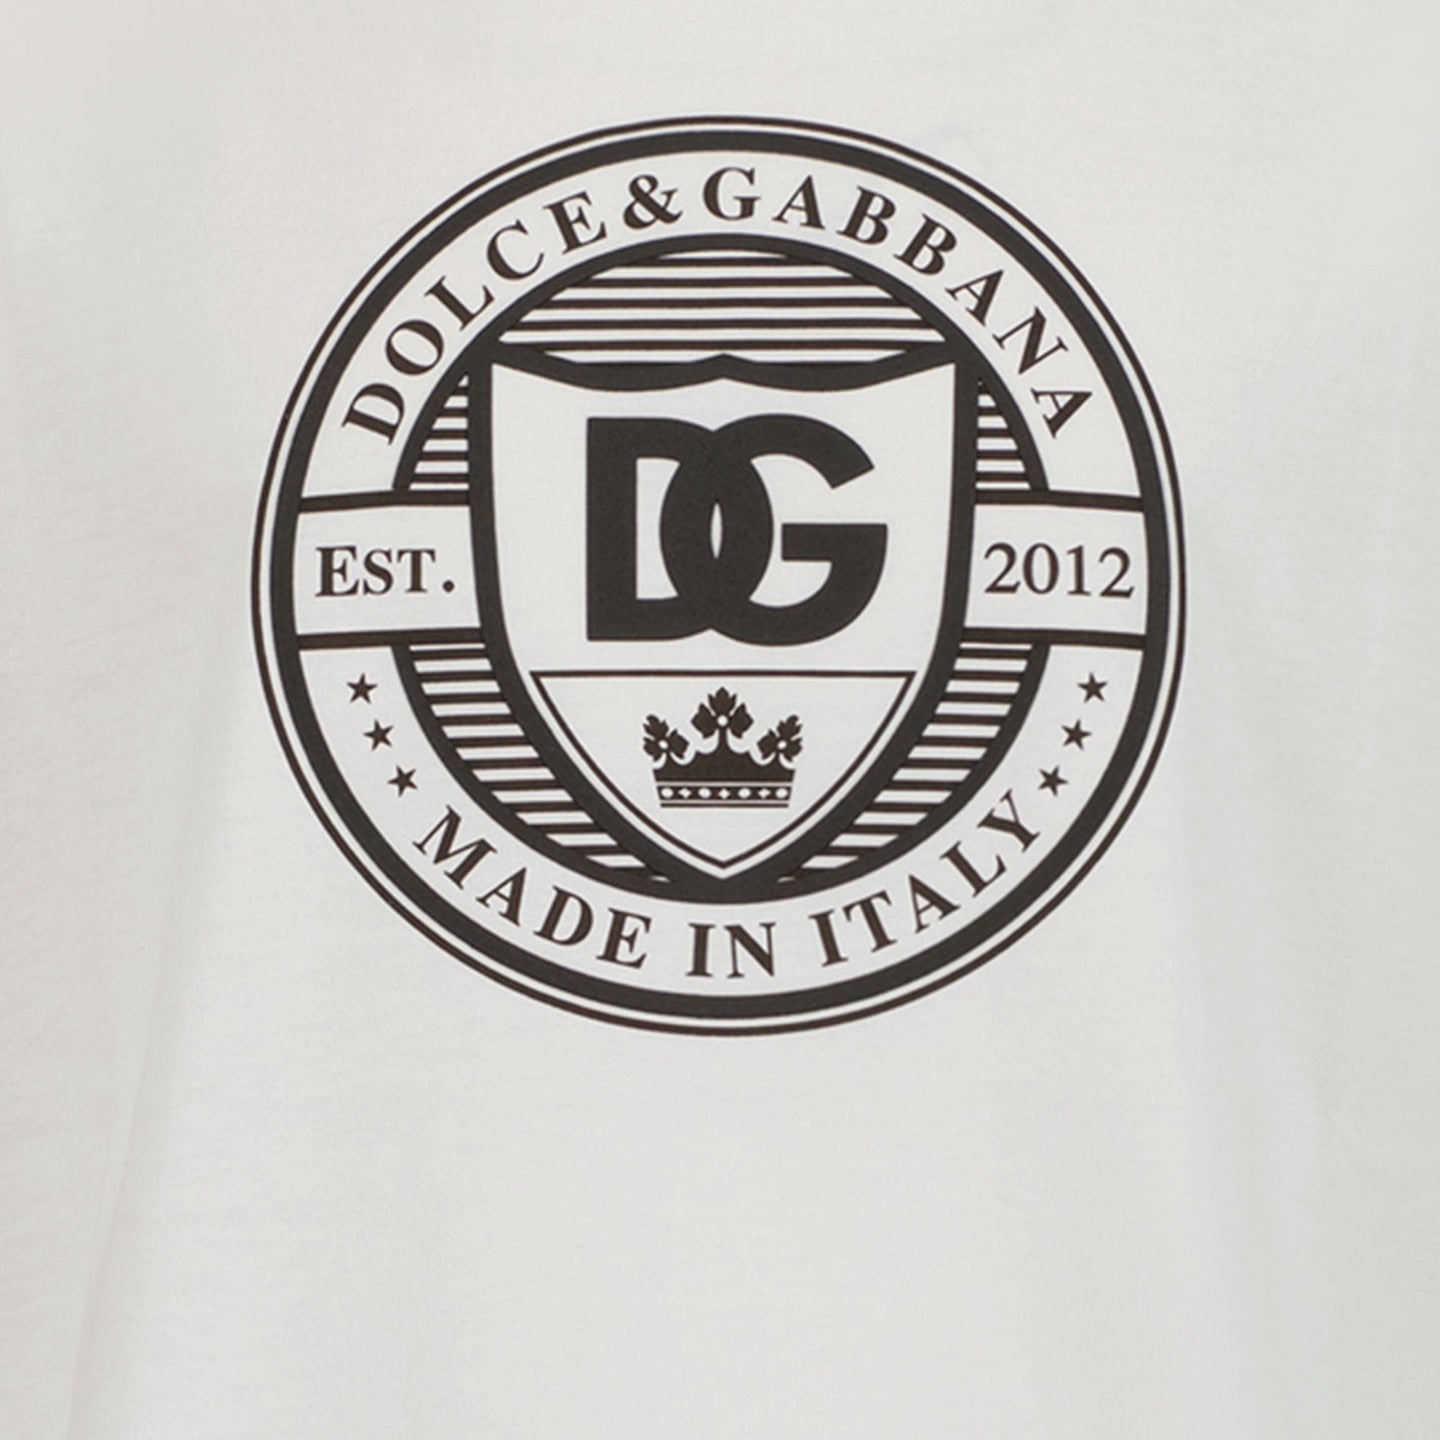 Dolce & Gabbana Jongens T-shirt Off White 2Y